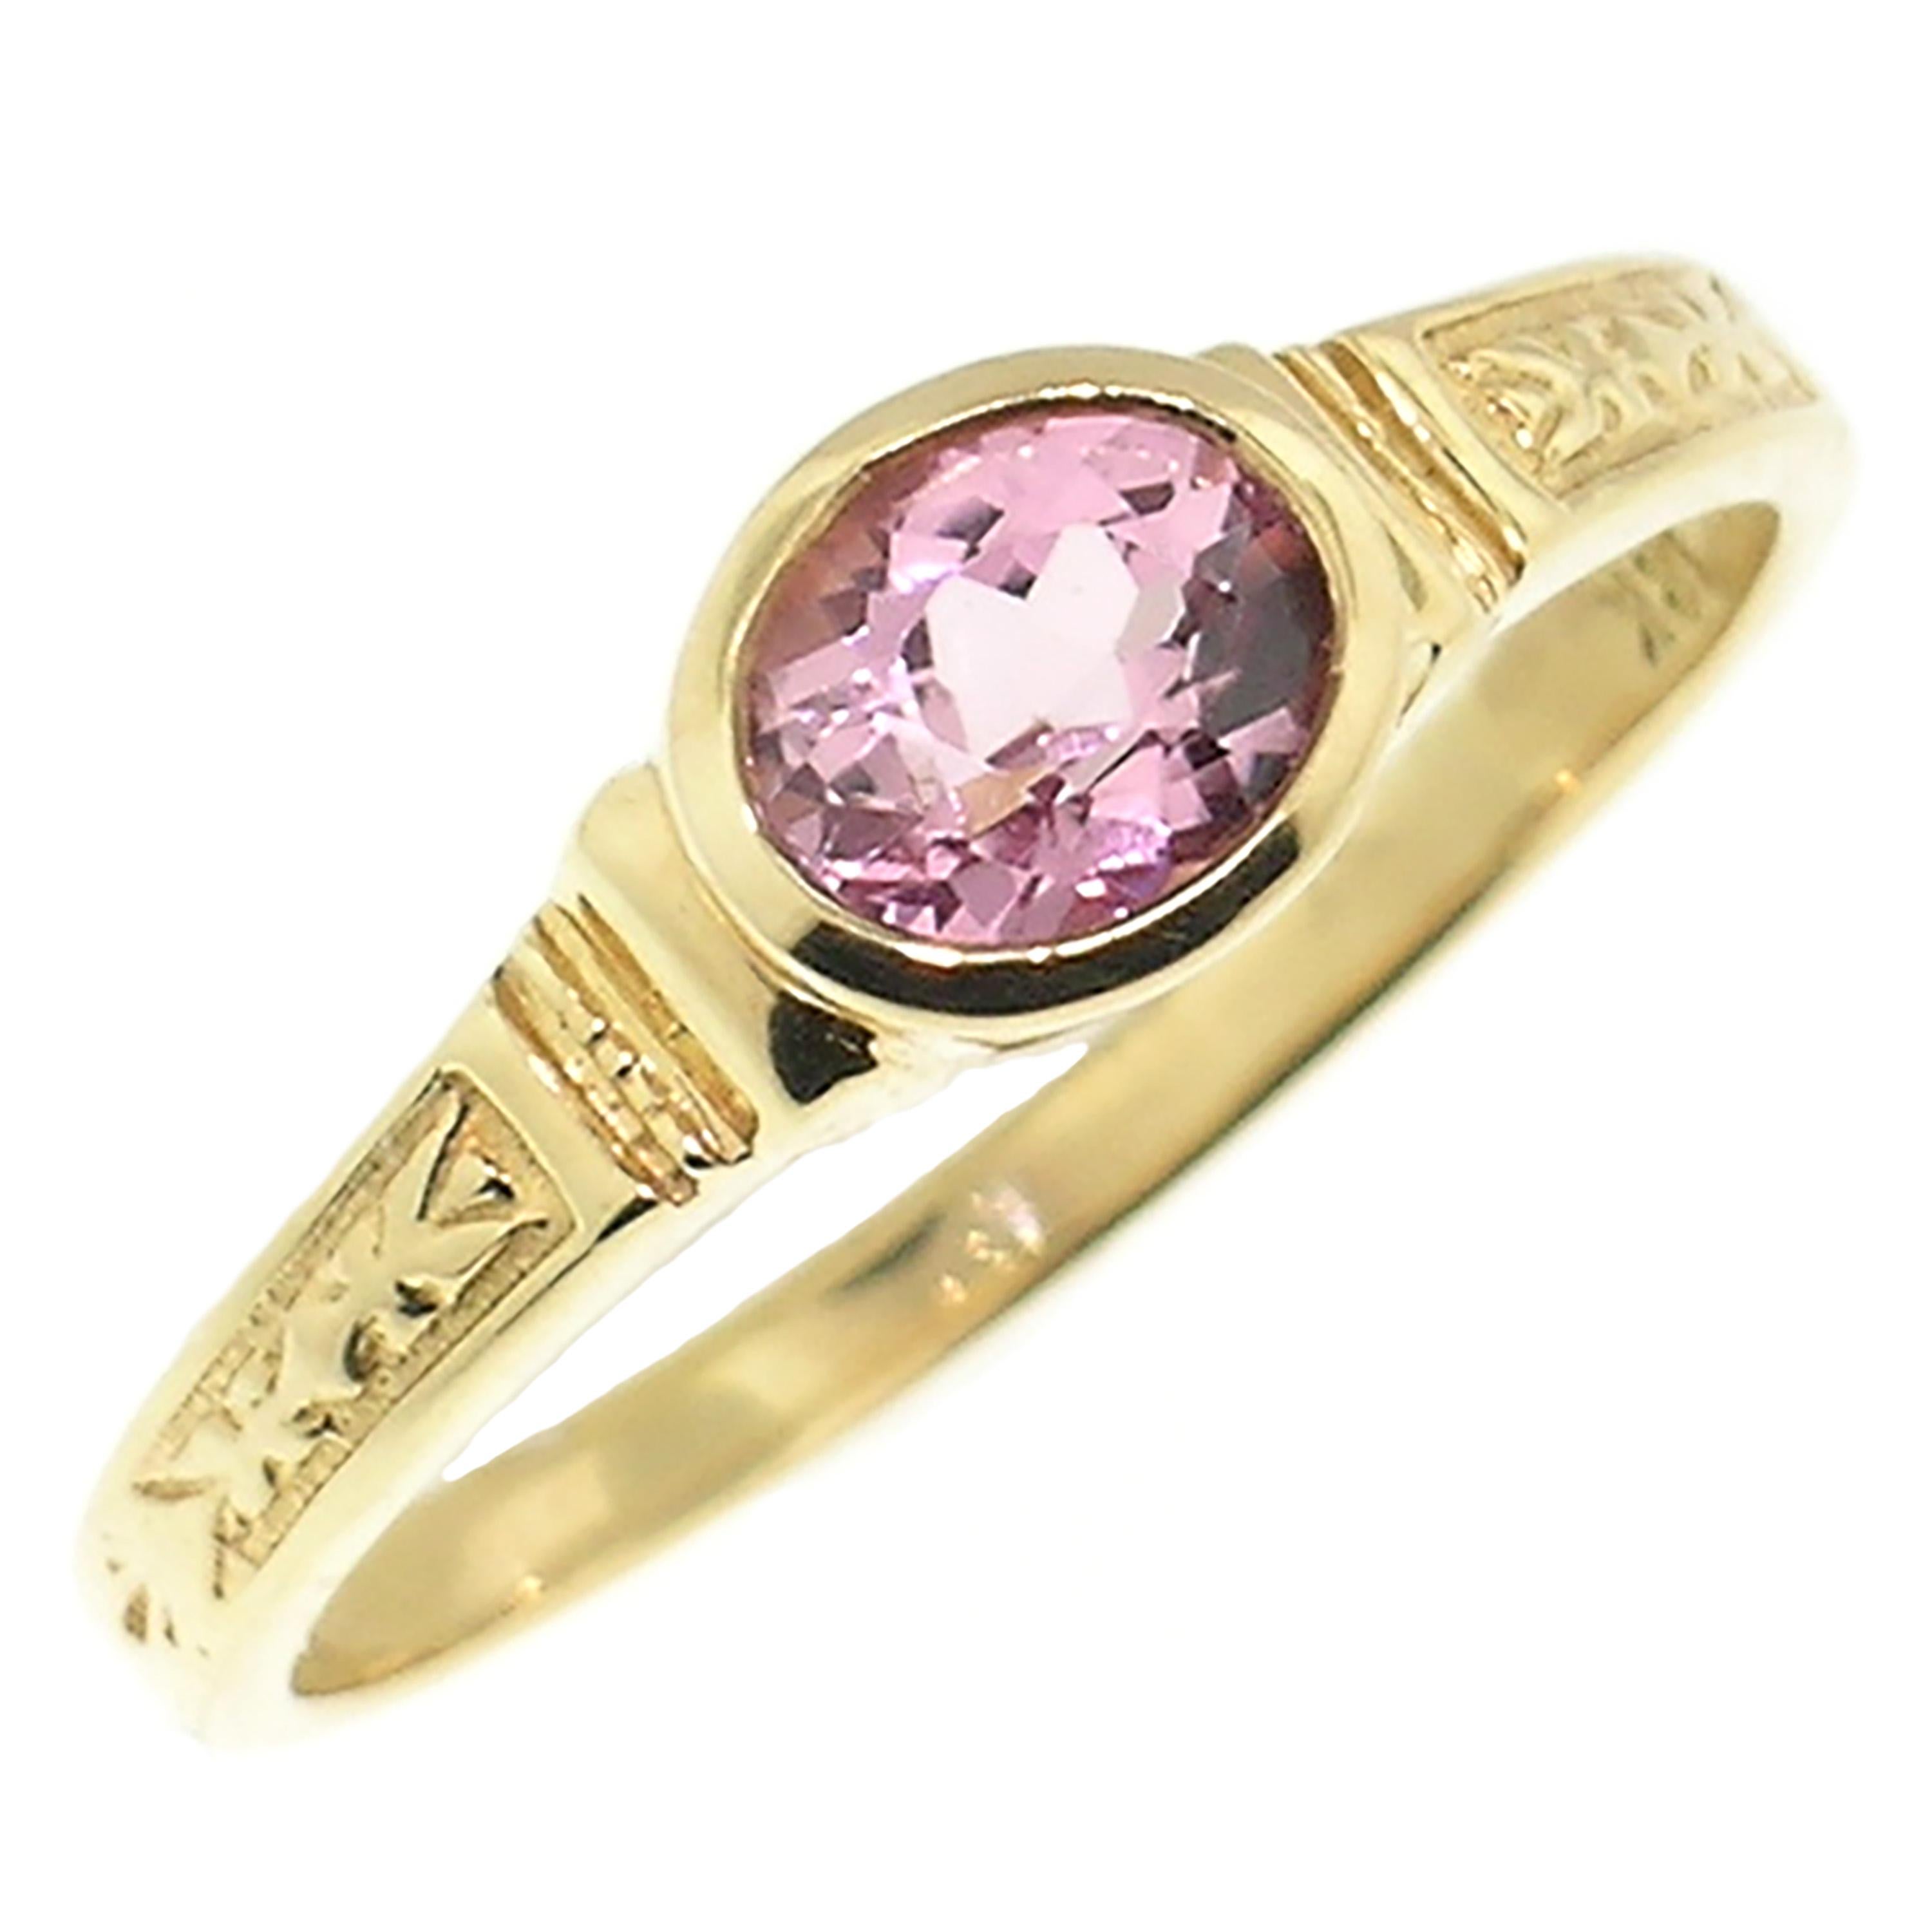 Pink Topaz in 18kt Gold Cassandra Ring by Cynthia Scott